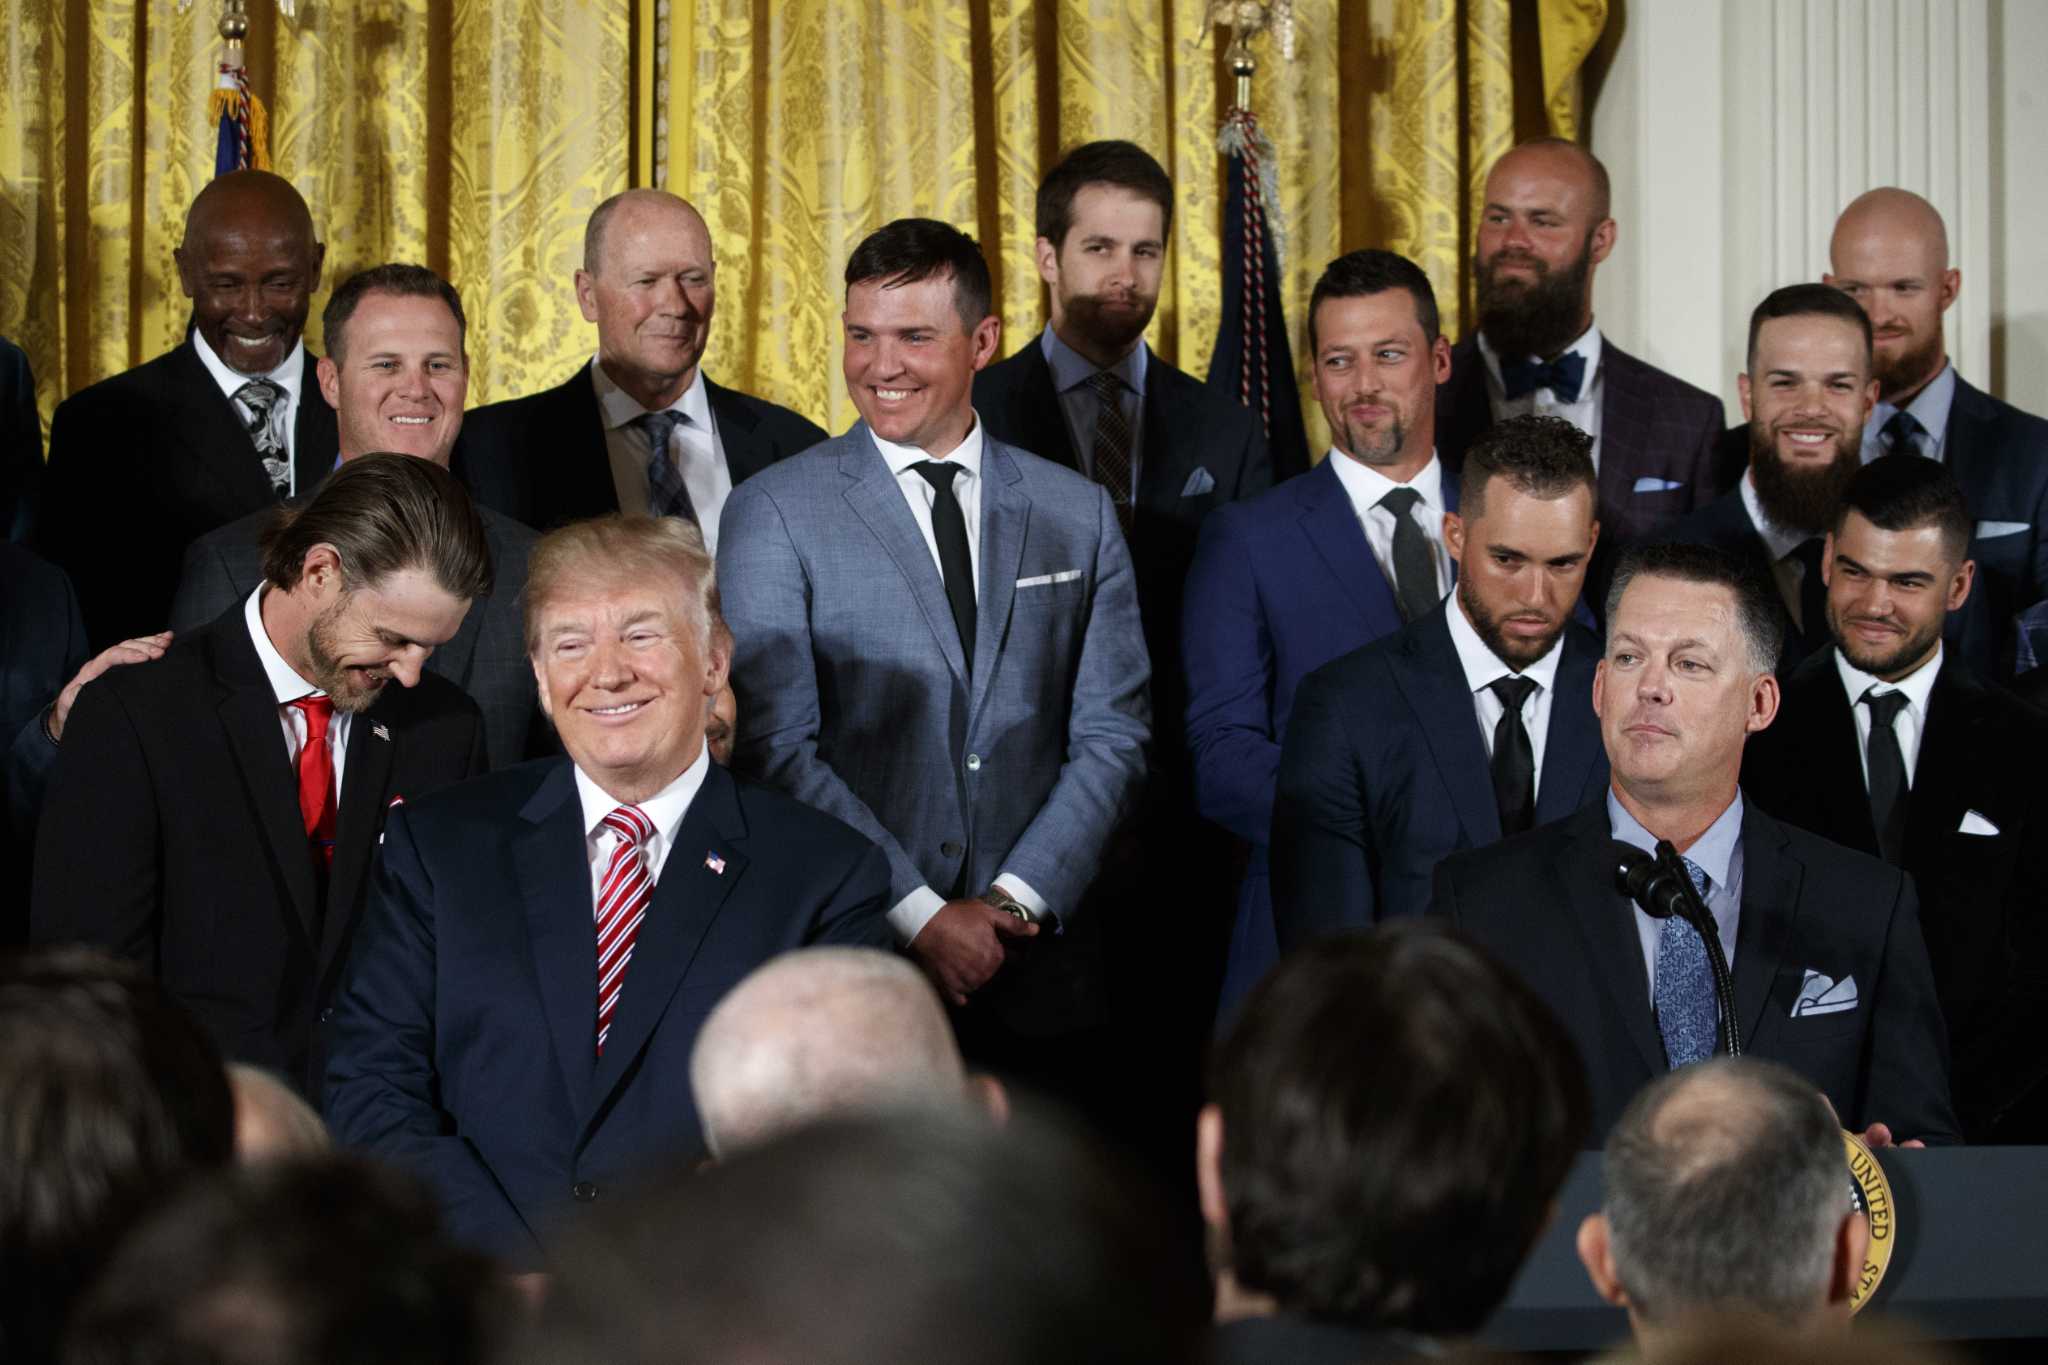 Trump recognizes World Series champion Houston Astros